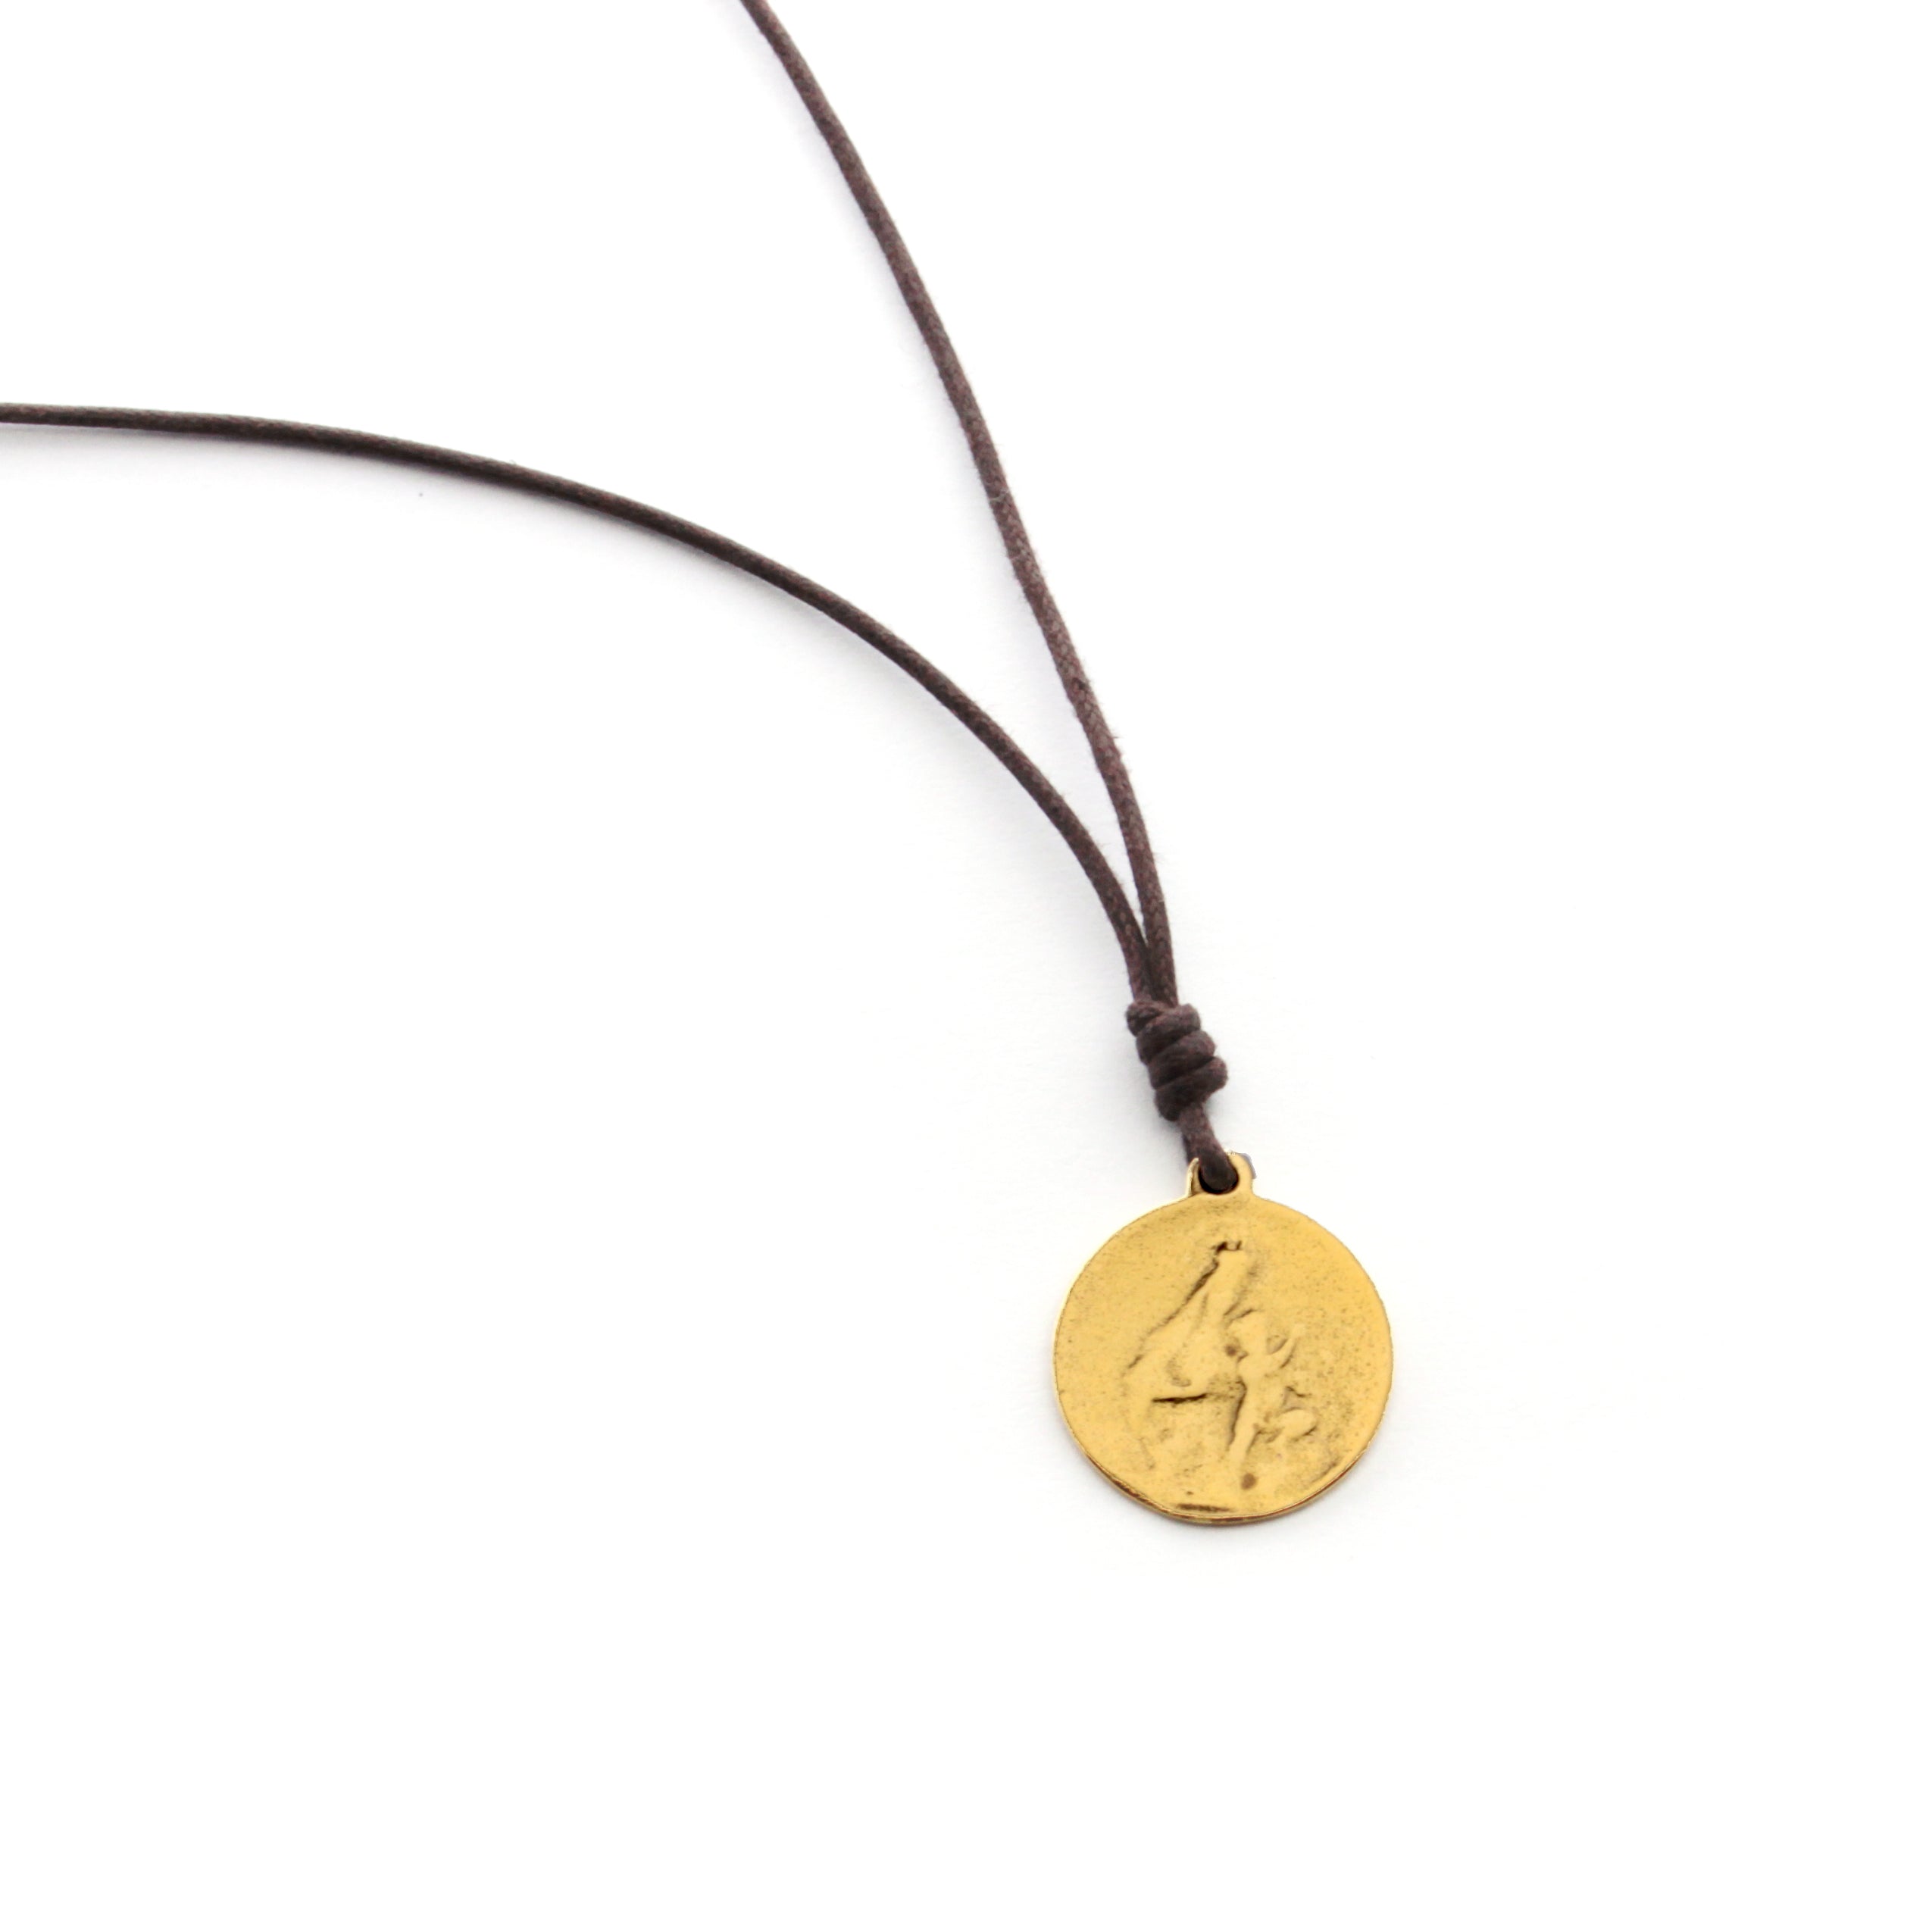 Escapulario MISERICORDIA - collar medalla dorada 18mm con cordón